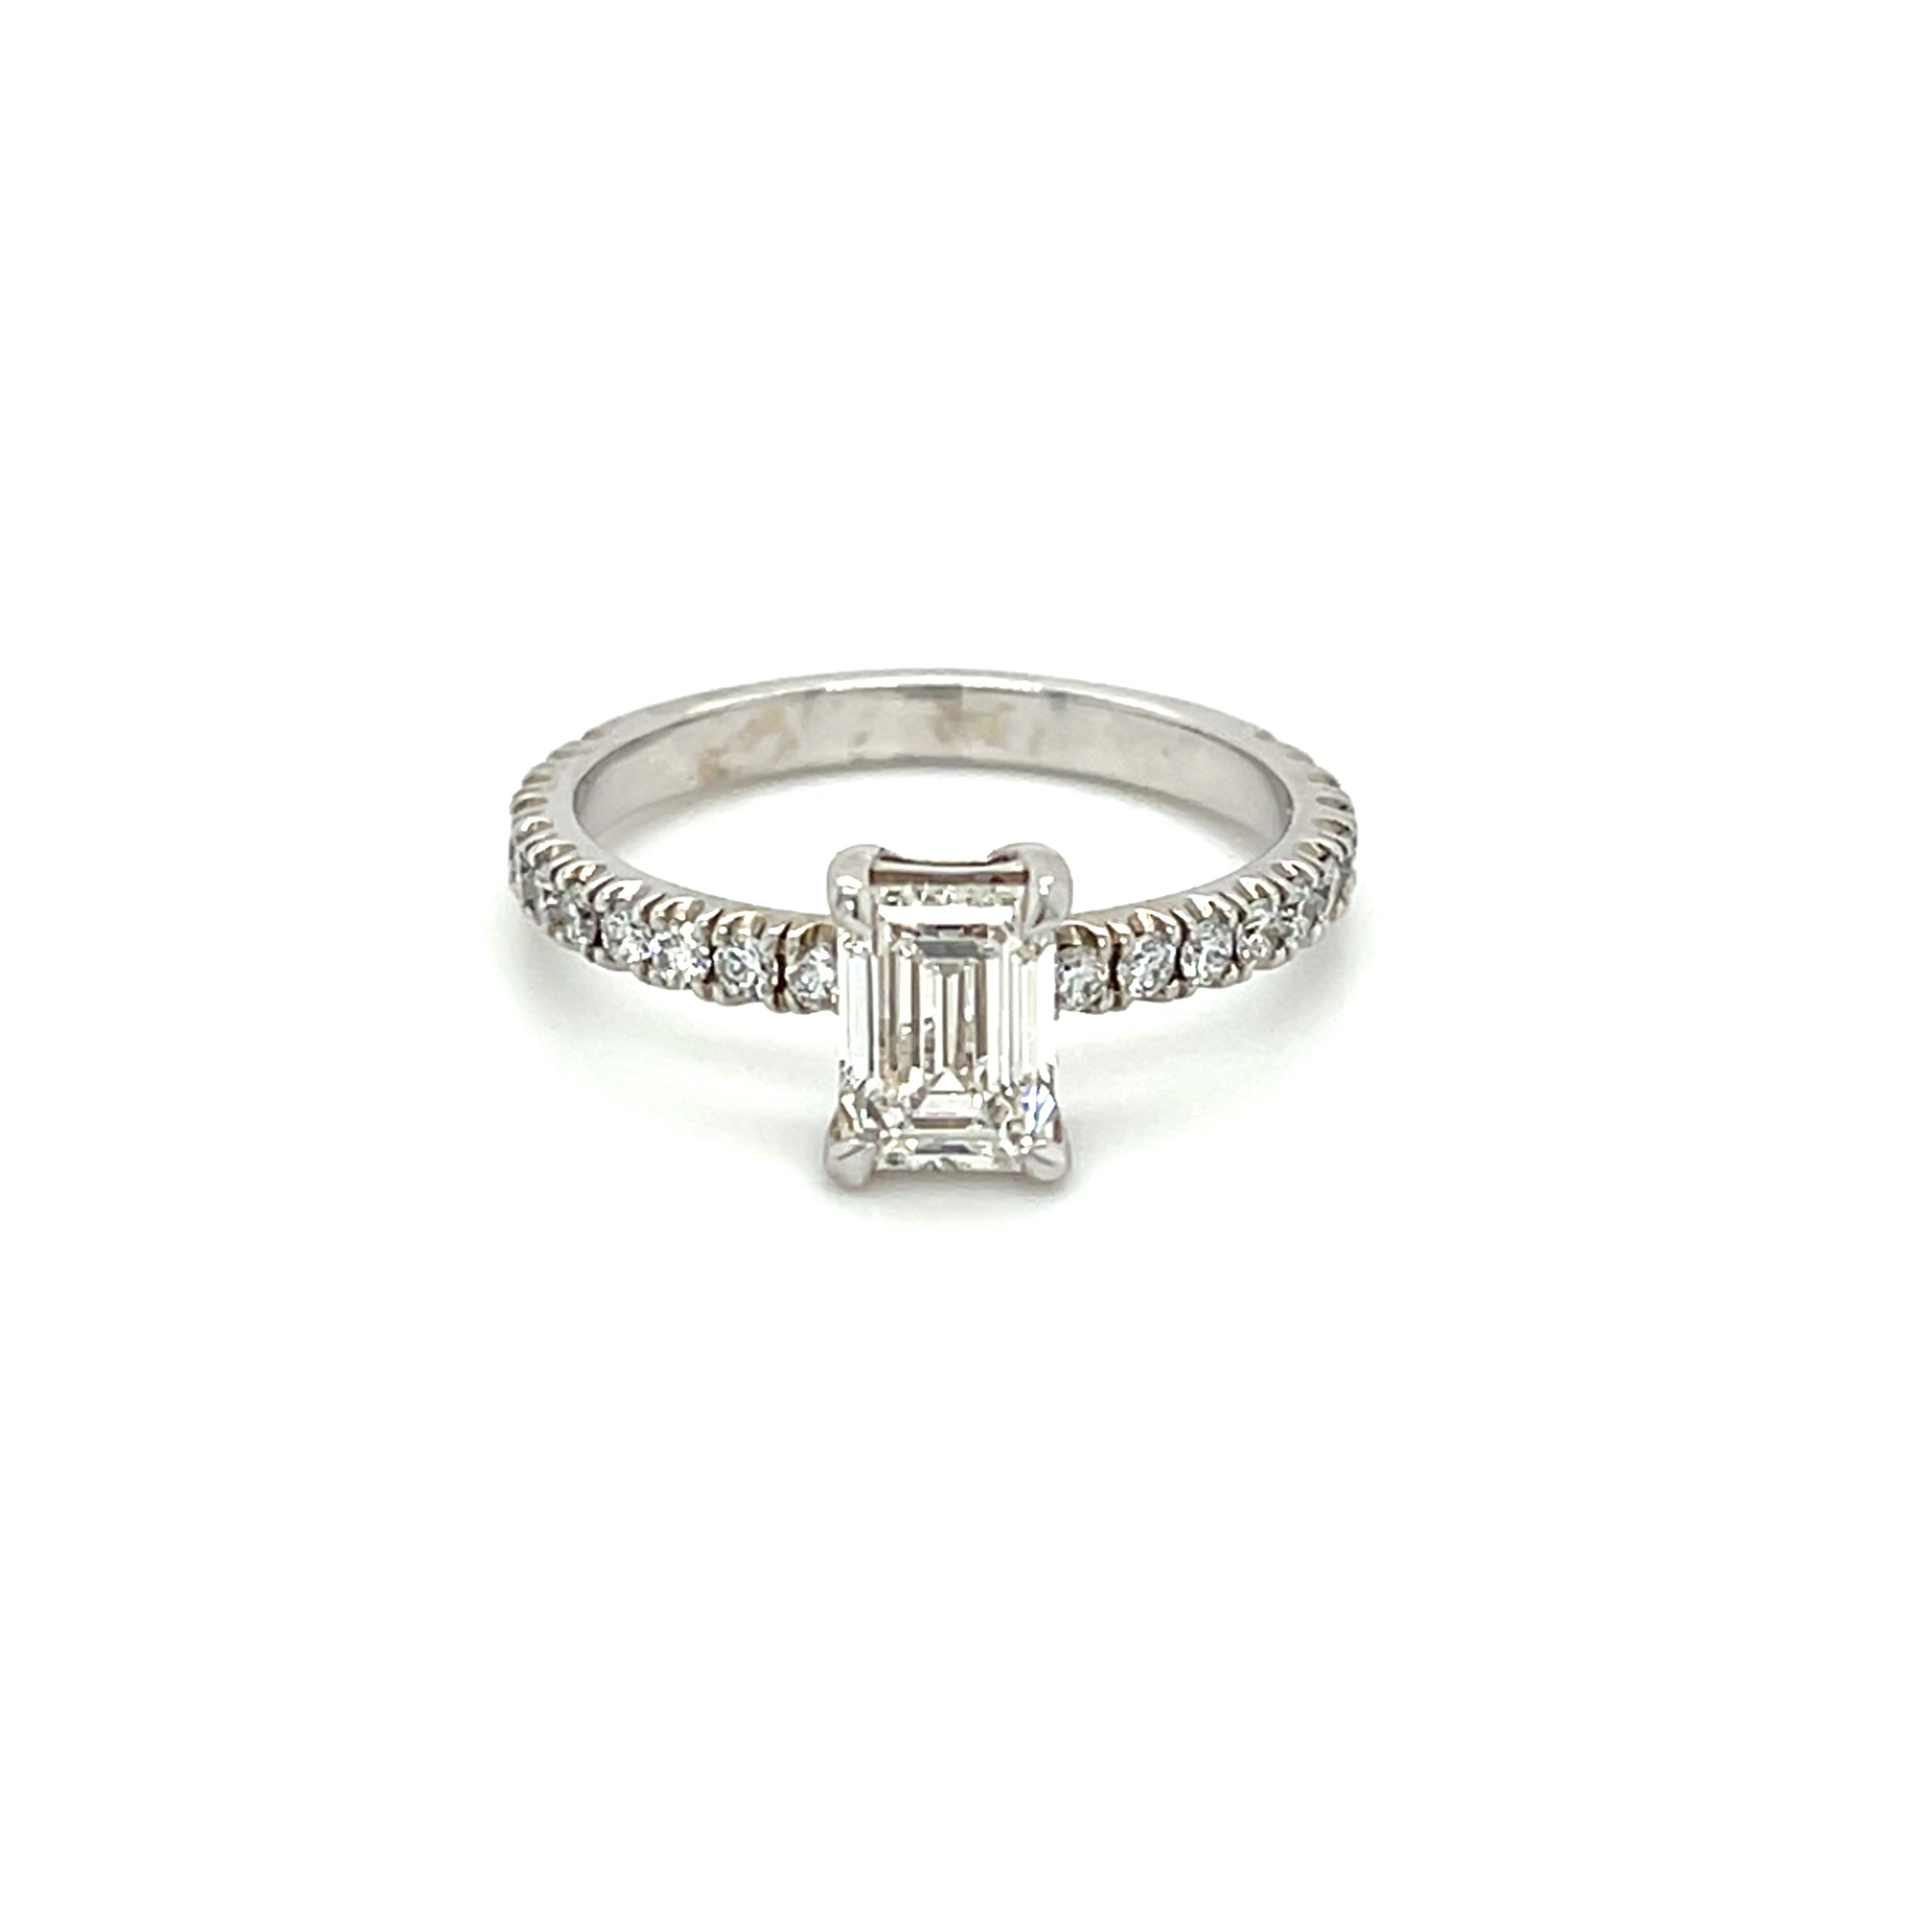 14k White Gold 1.00ct Emerald Cut Diamond Ring